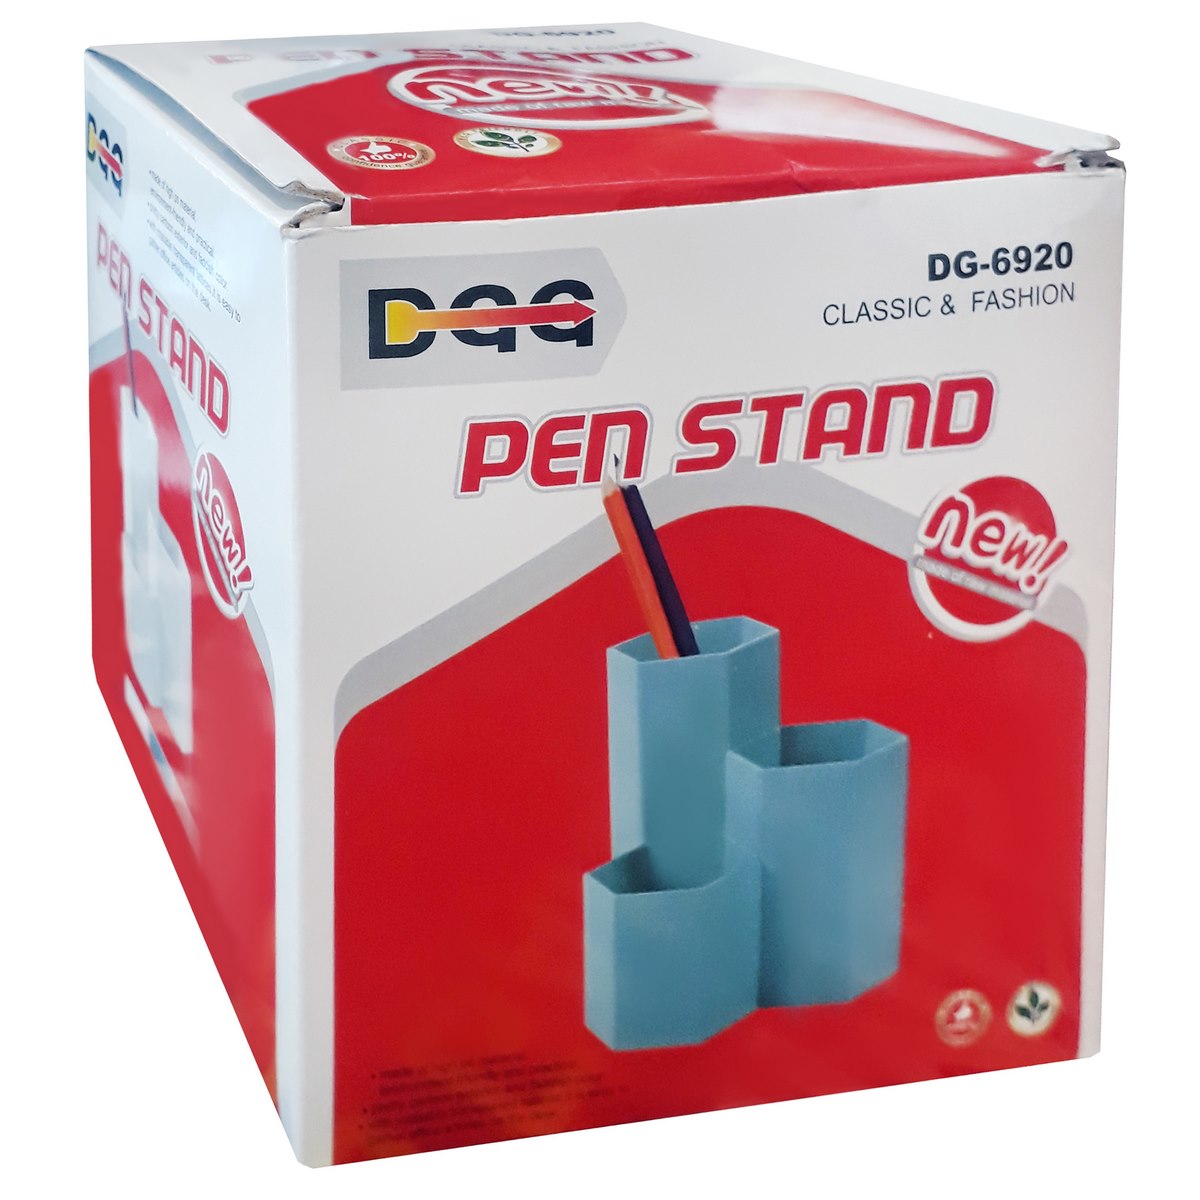 jags-mumbai Pen Stands Plastic Pen Stand DG-6920